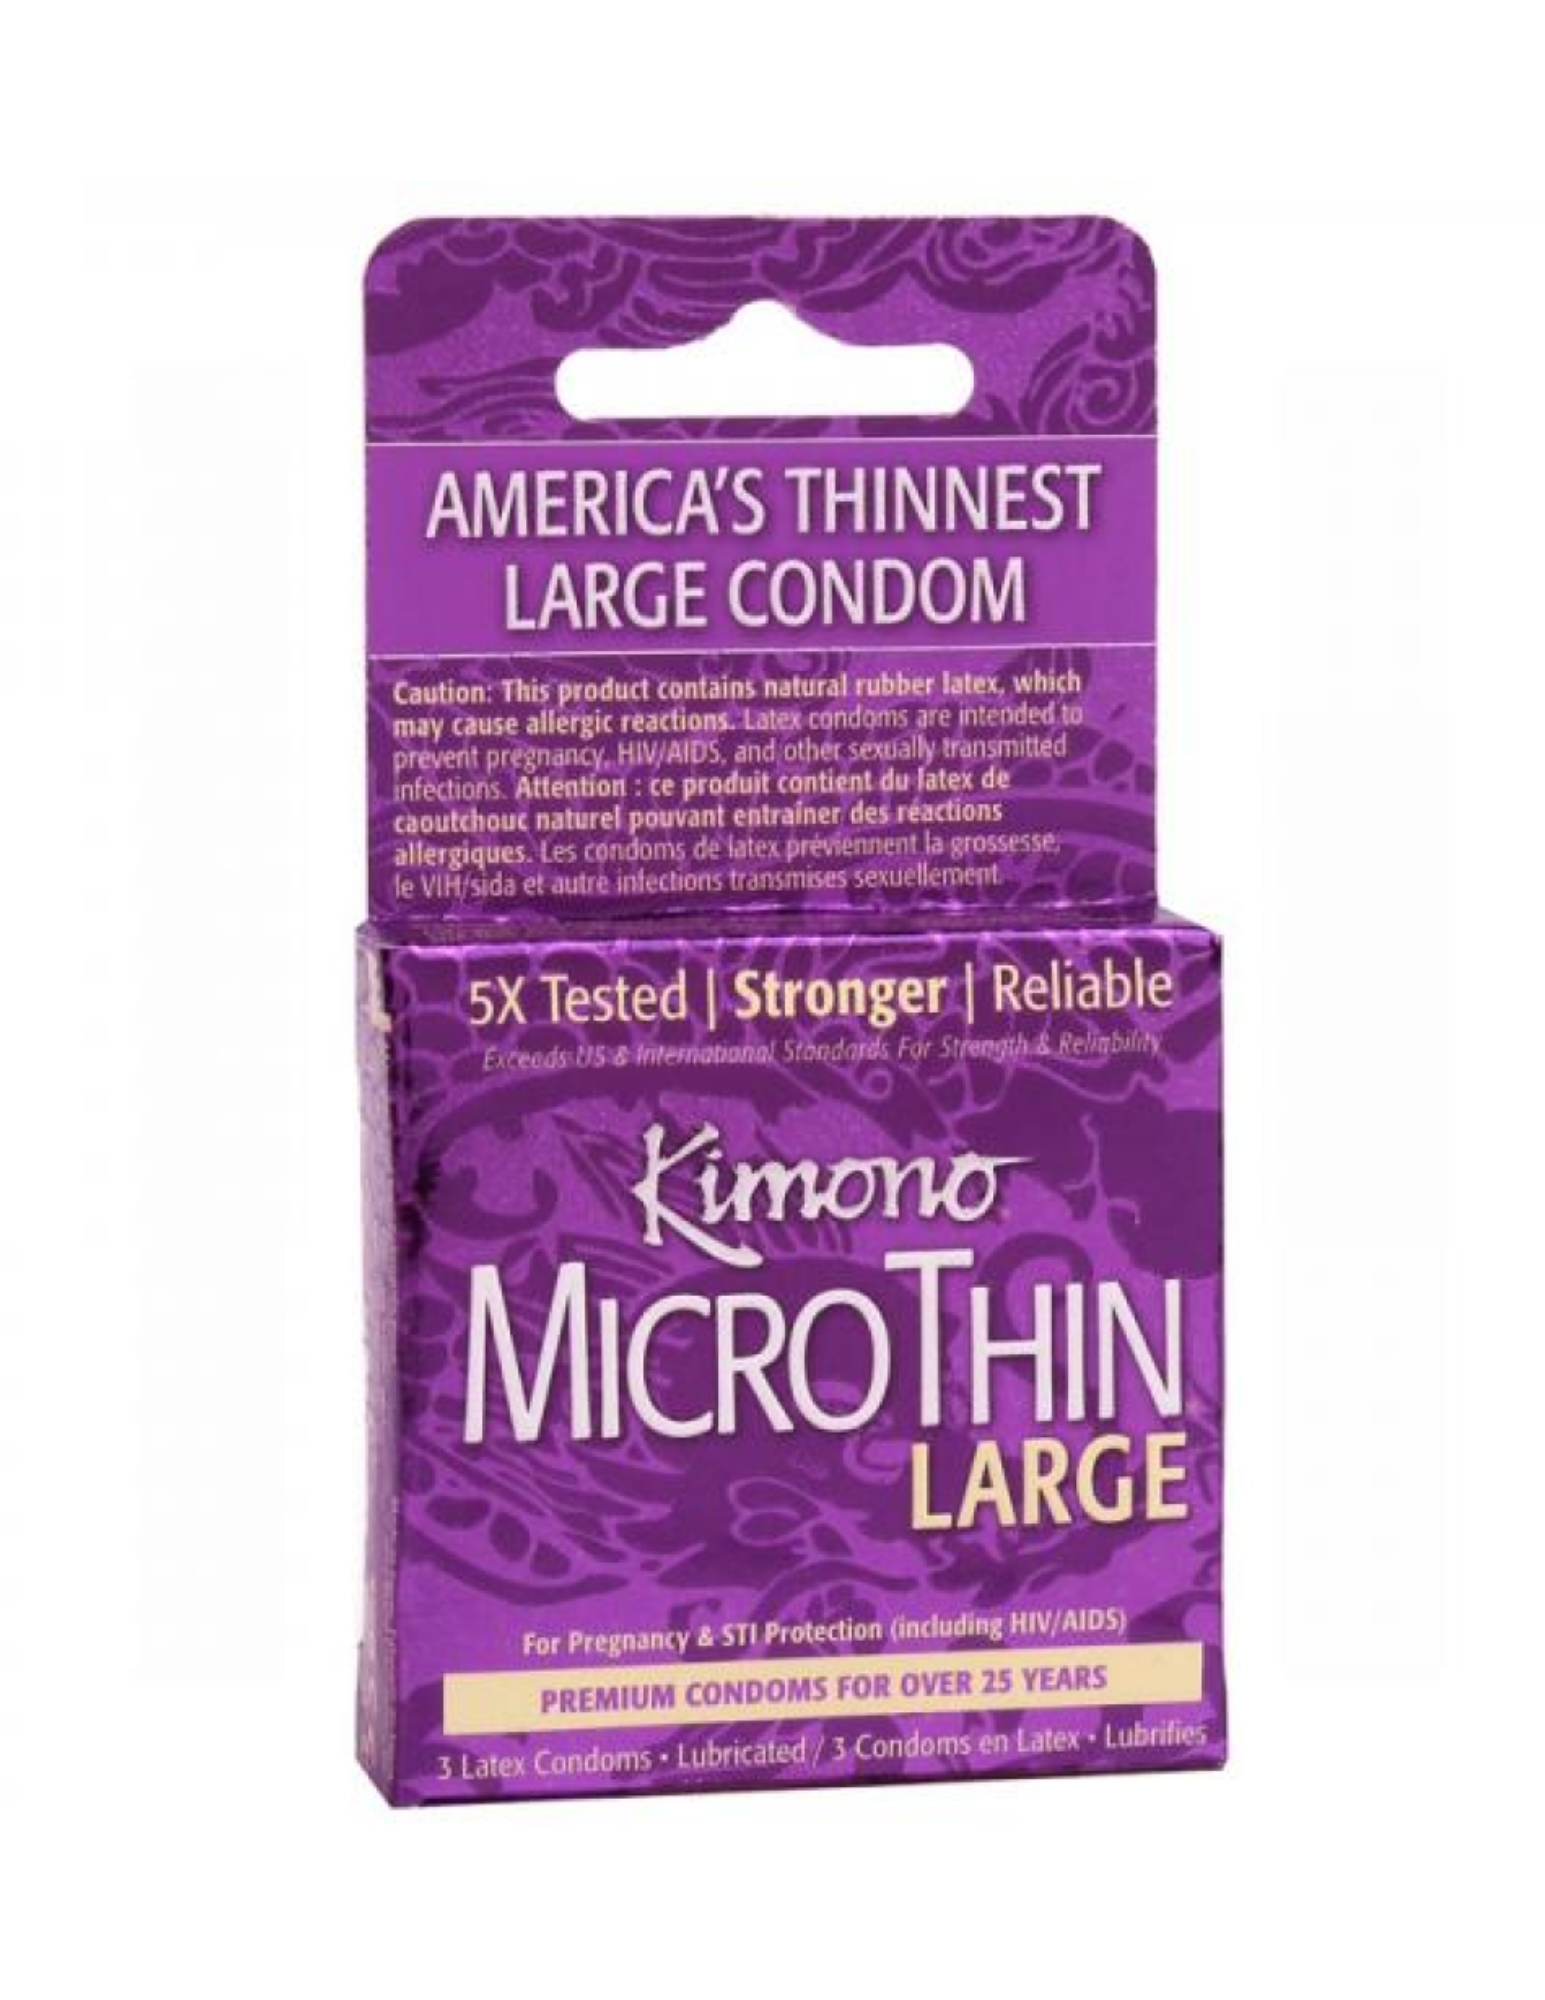 Photo of the Large MicroThin Condoms from Kimono (purple box).